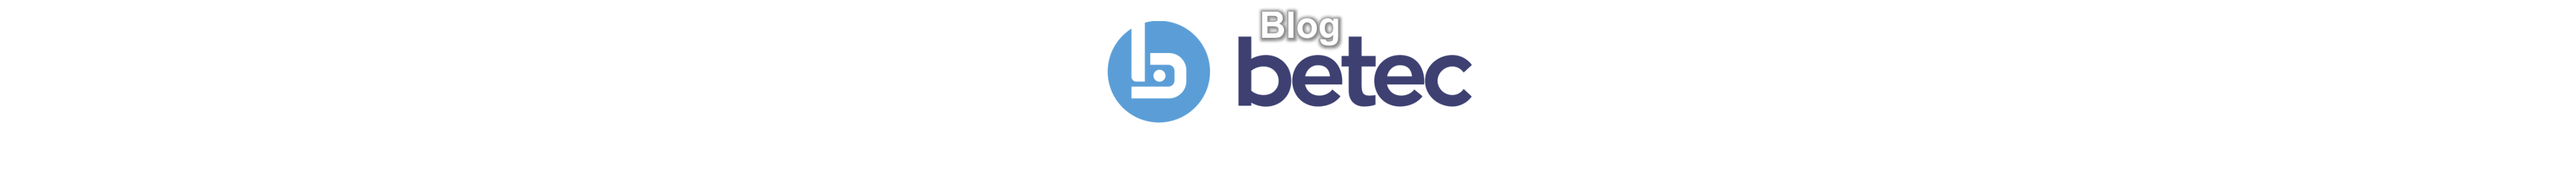 Blog Betec